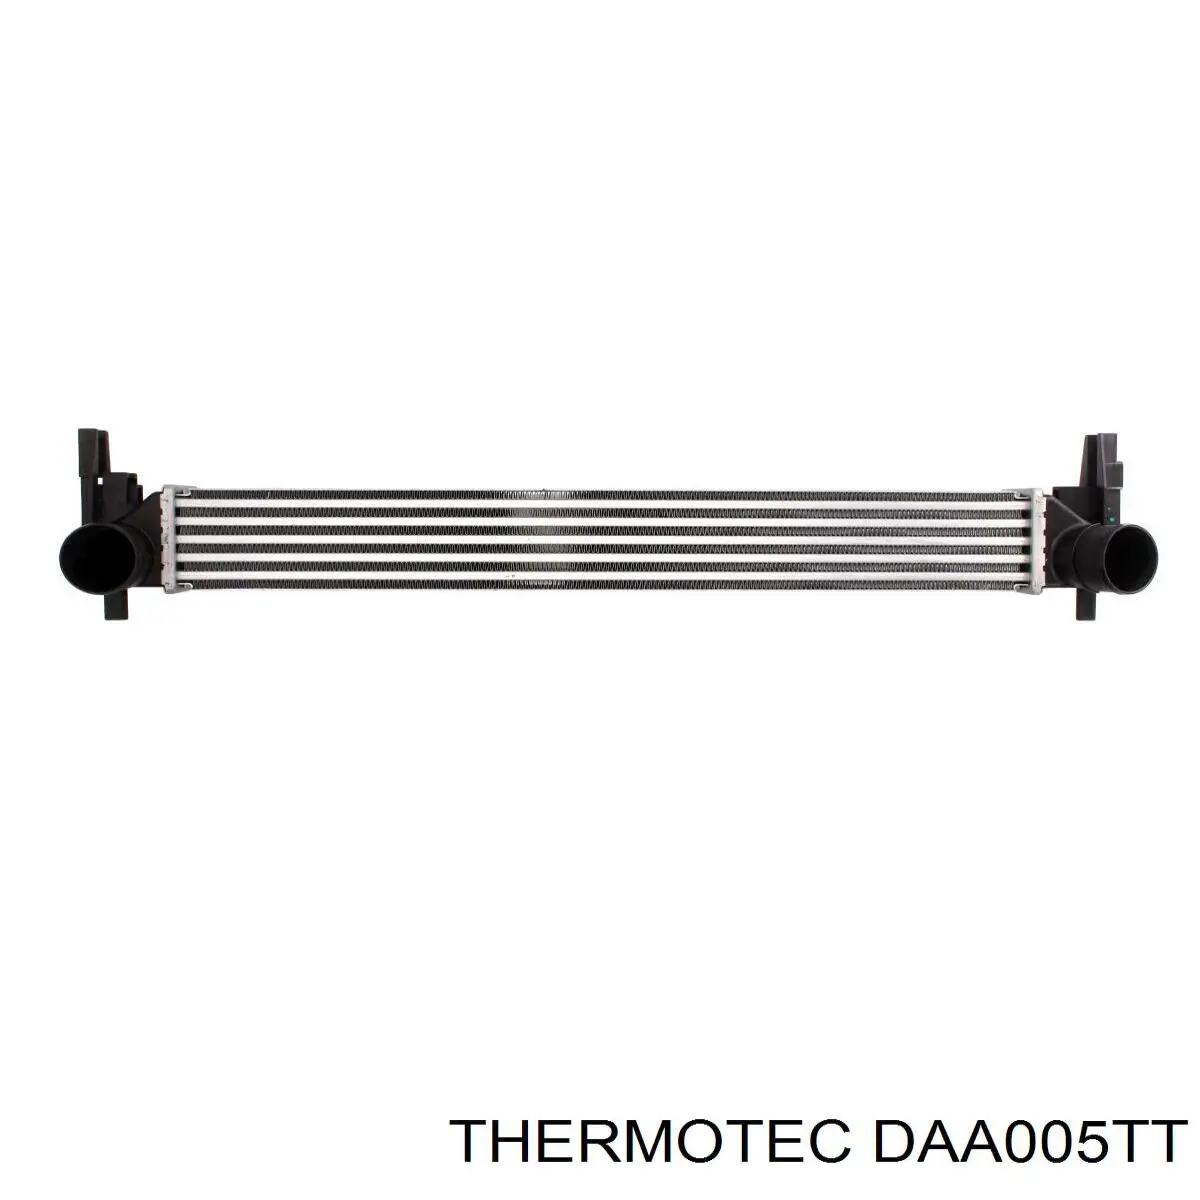 DAA005TT Thermotec intercooler